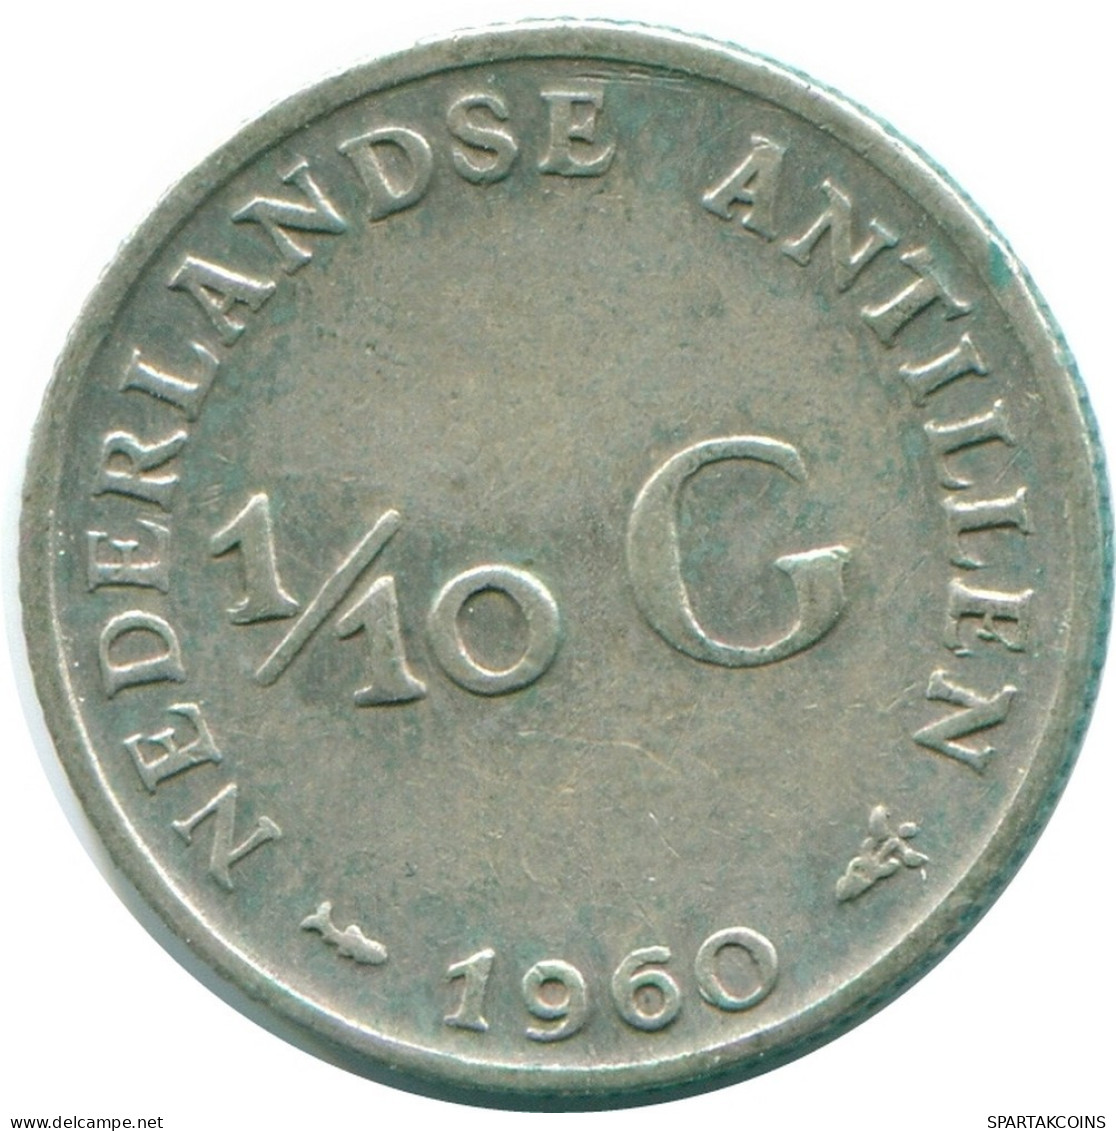 1/10 GULDEN 1960 NIEDERLÄNDISCHE ANTILLEN SILBER Koloniale Münze #NL12272.3.D.A - Netherlands Antilles